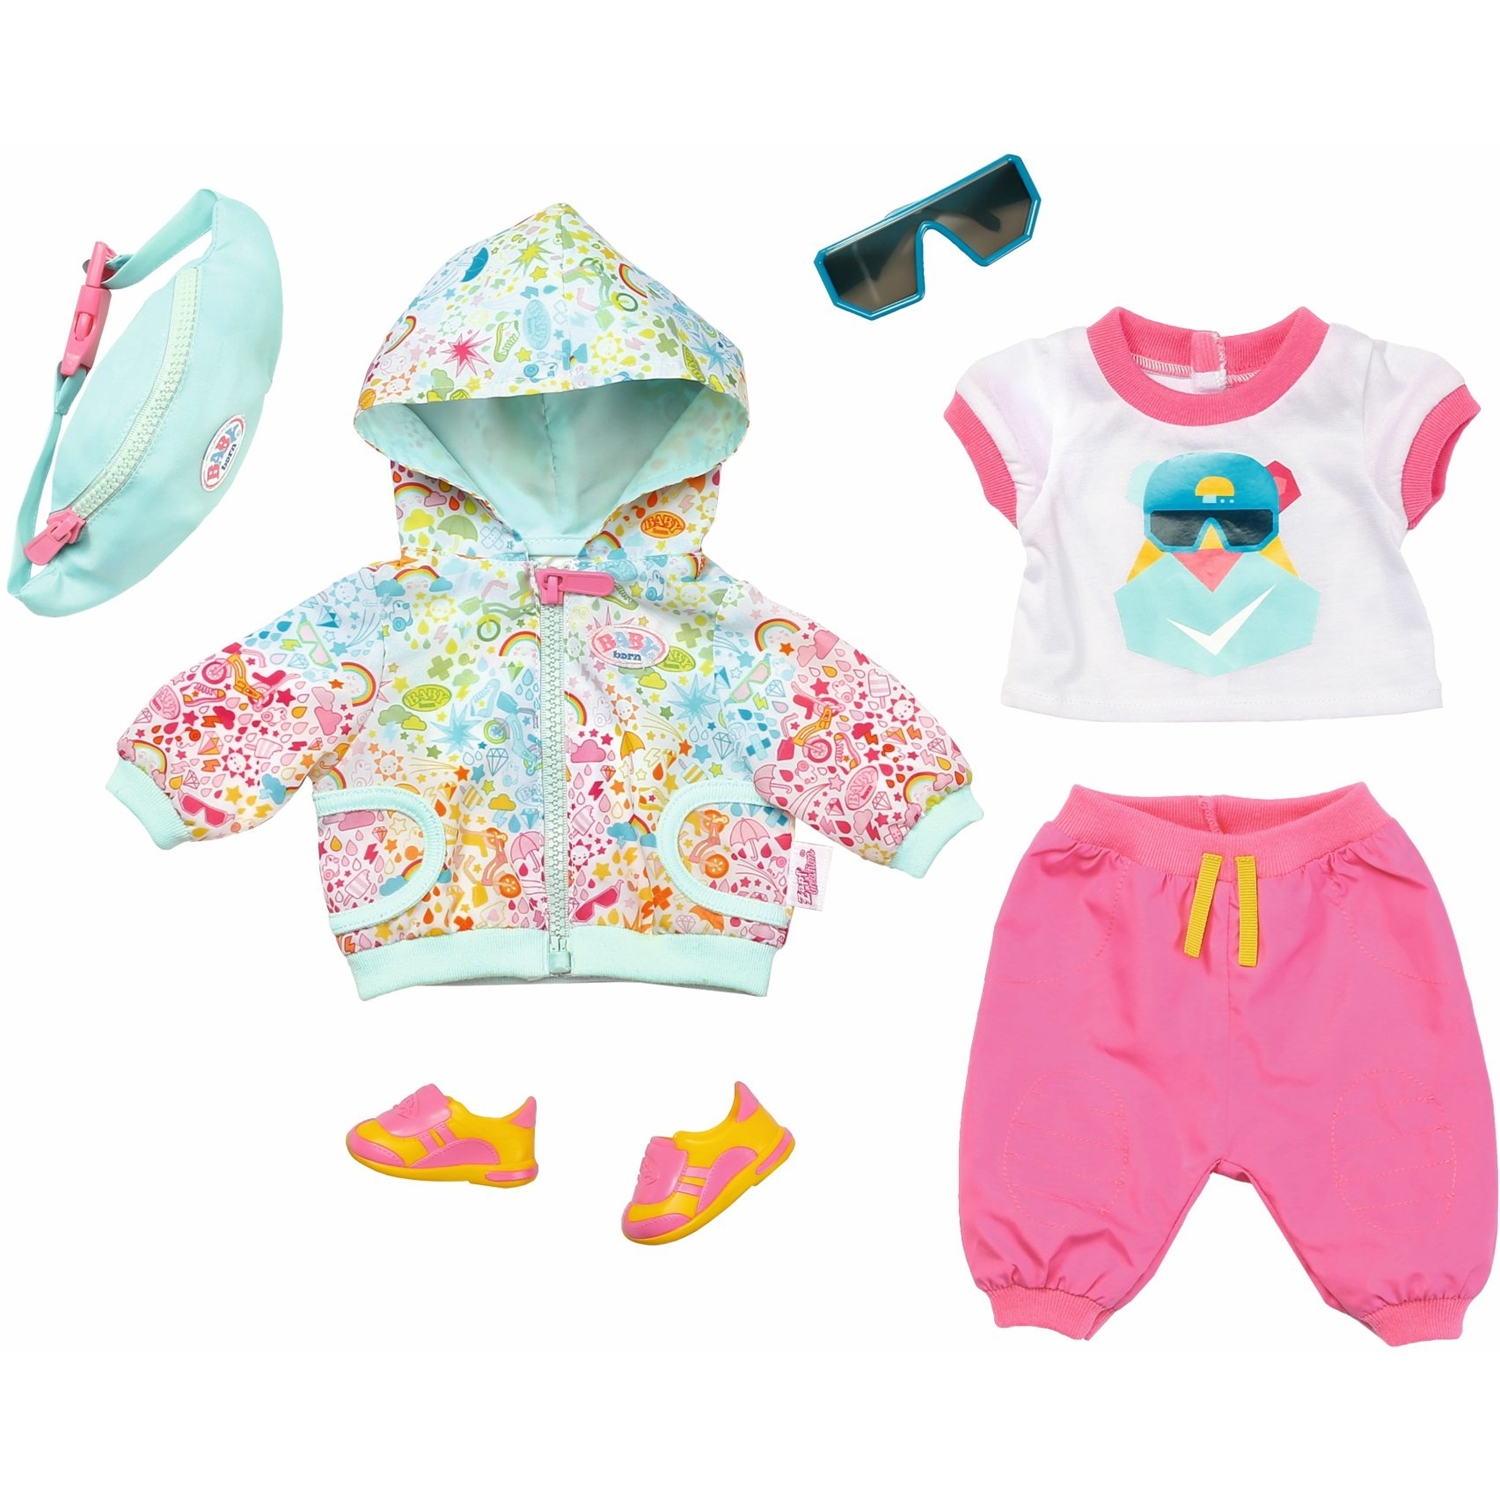 Zapf Creation одежда для куклы Baby born 824559